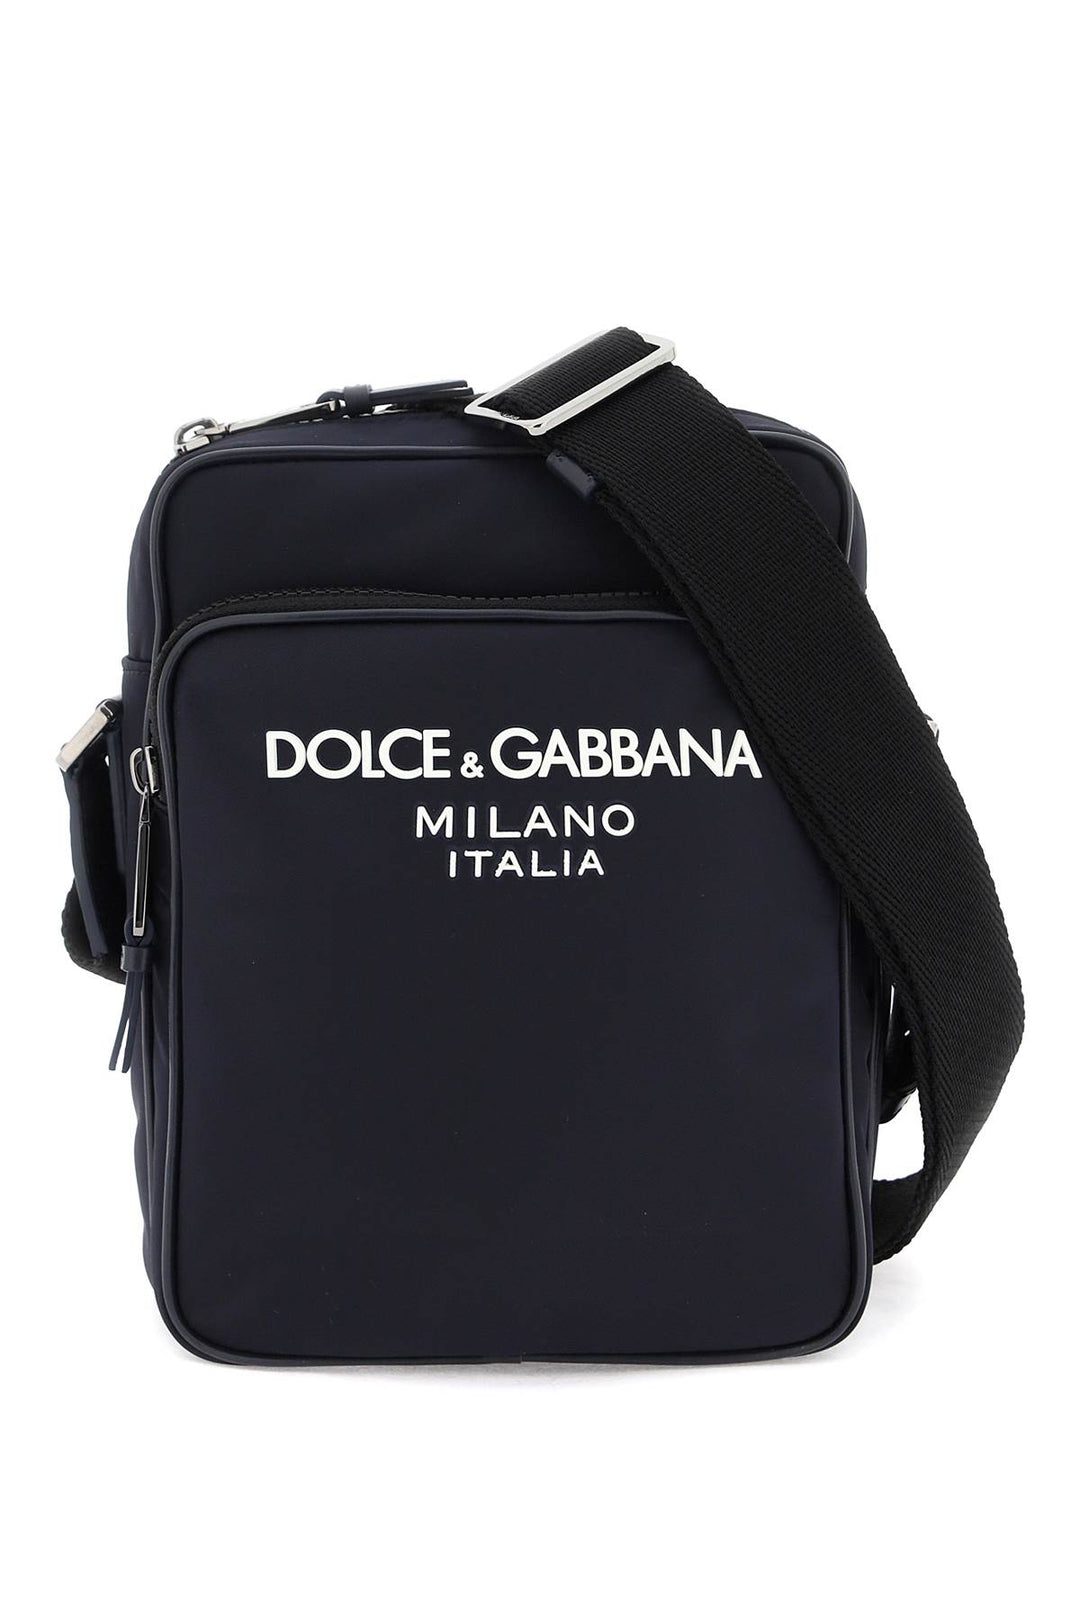 Dolce & Gabbana Nylon Crossbody Bag   Blu